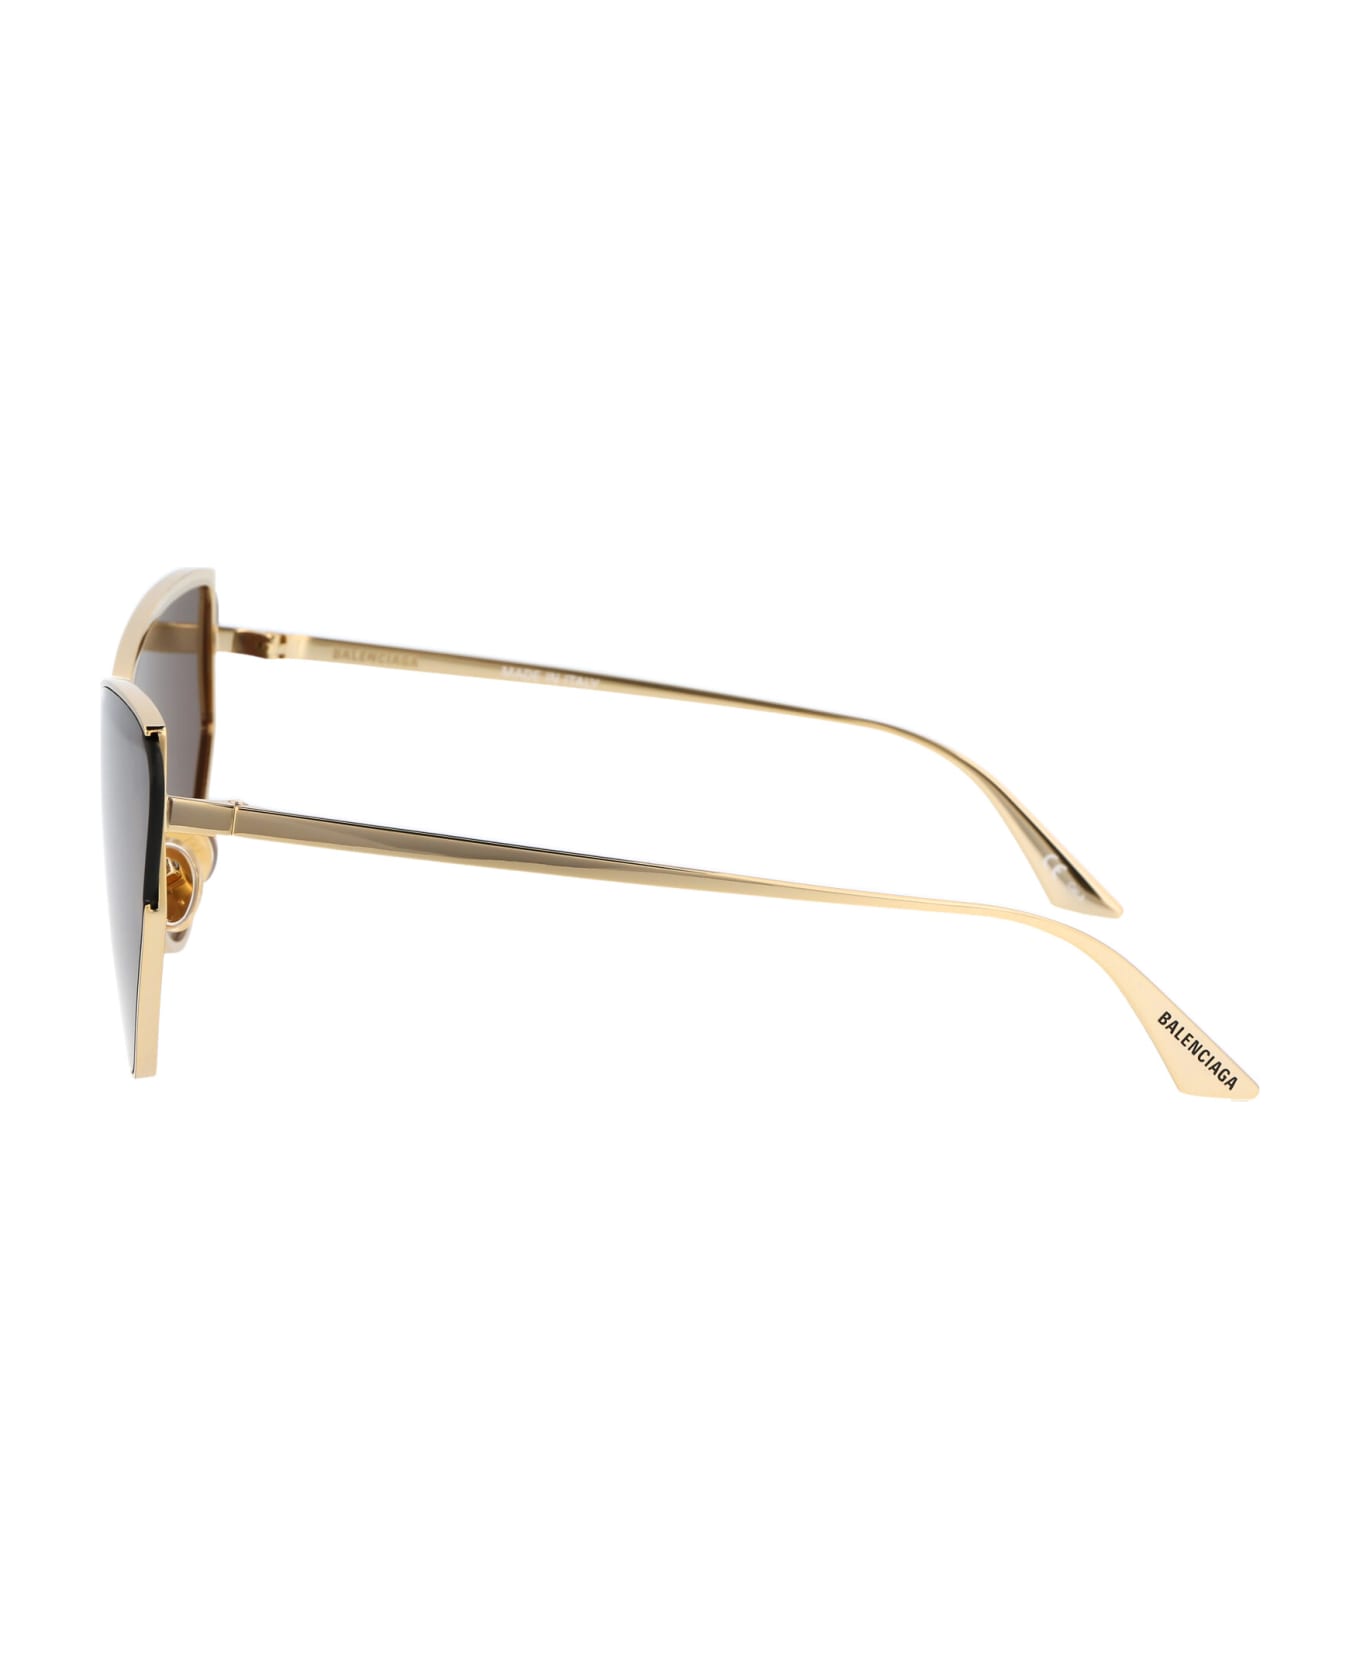 Balenciaga Eyewear Bb0191s Sunglasses - 002 GOLD GOLD BROWN サングラス